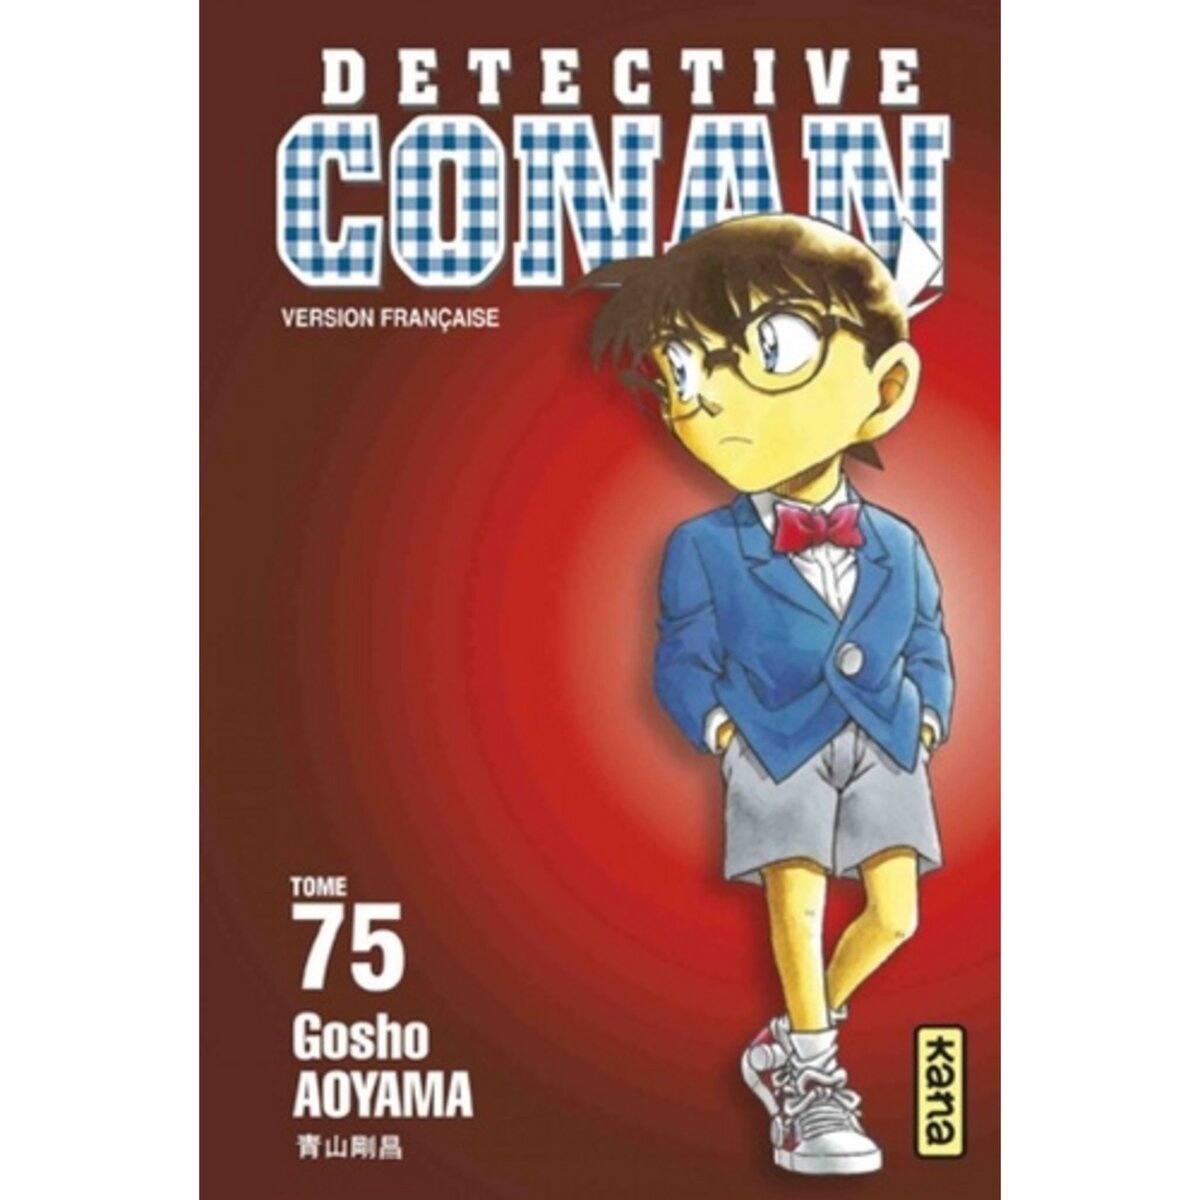  DETECTIVE CONAN TOME 75, Aoyama Gôshô